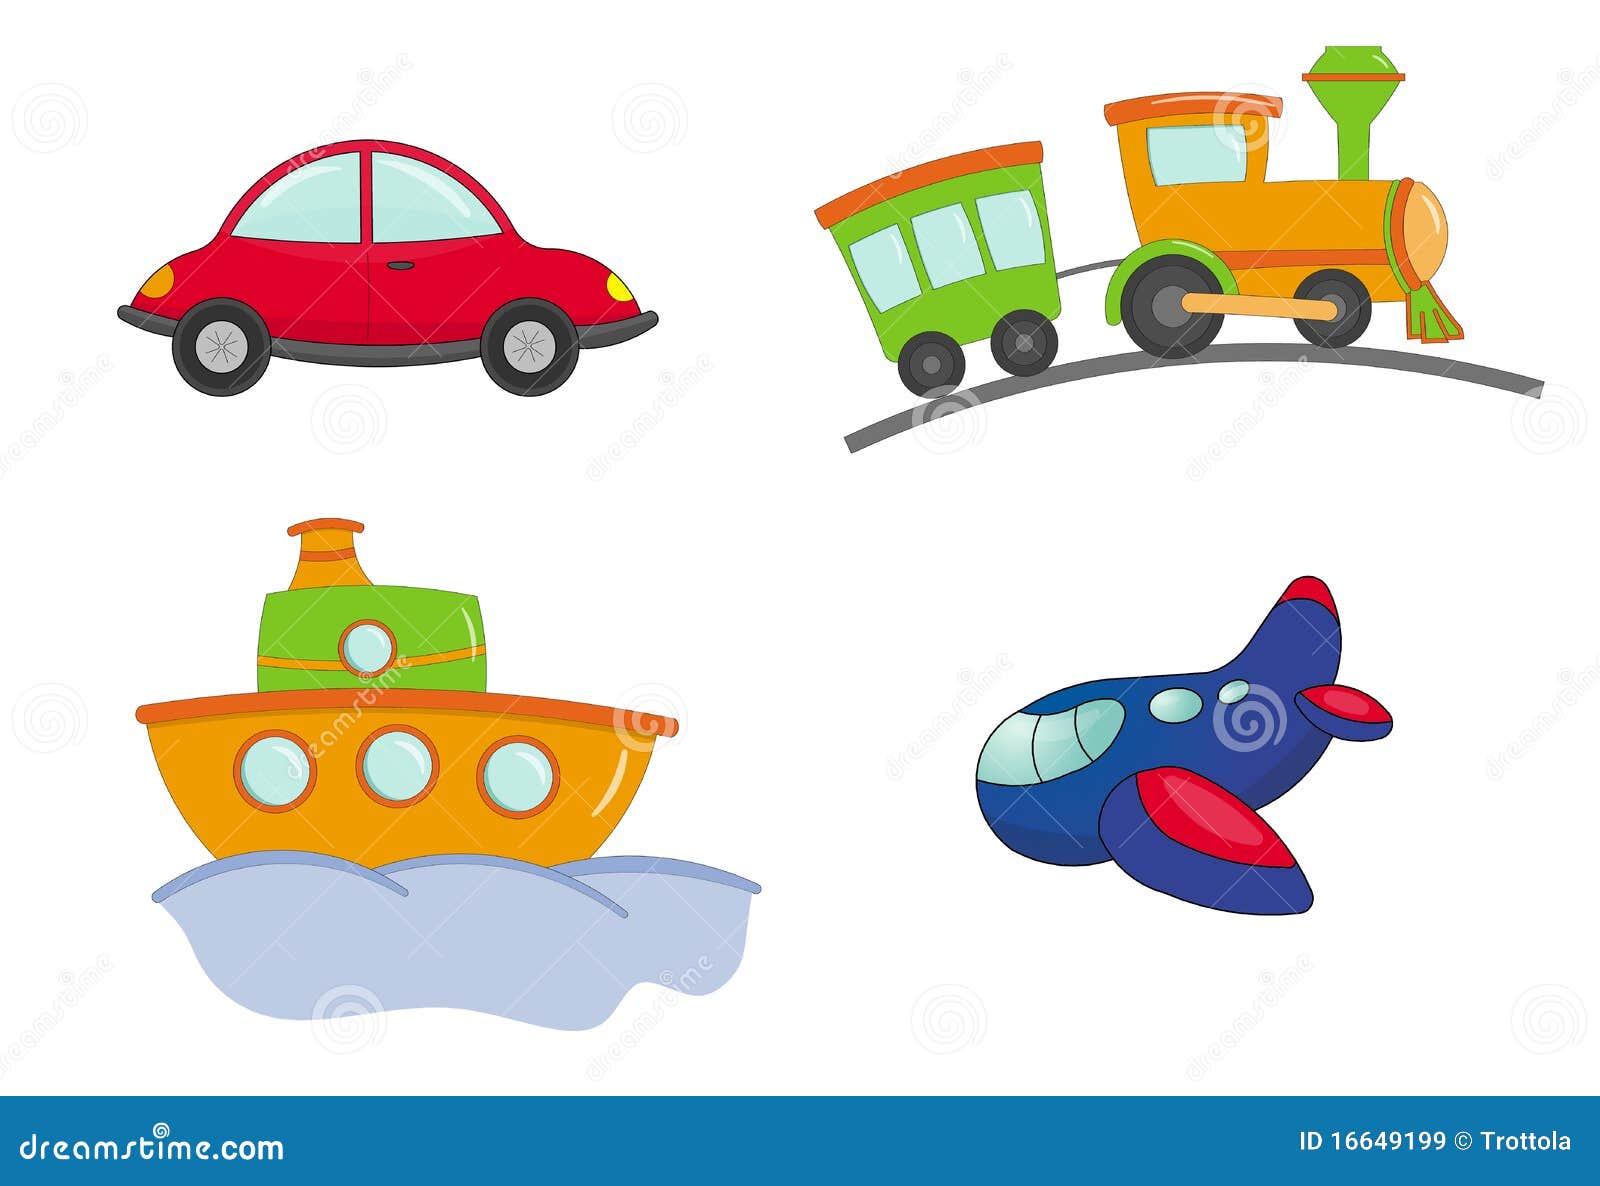 Transport cartoon style stock illustration. Illustration of isolated -  16649199